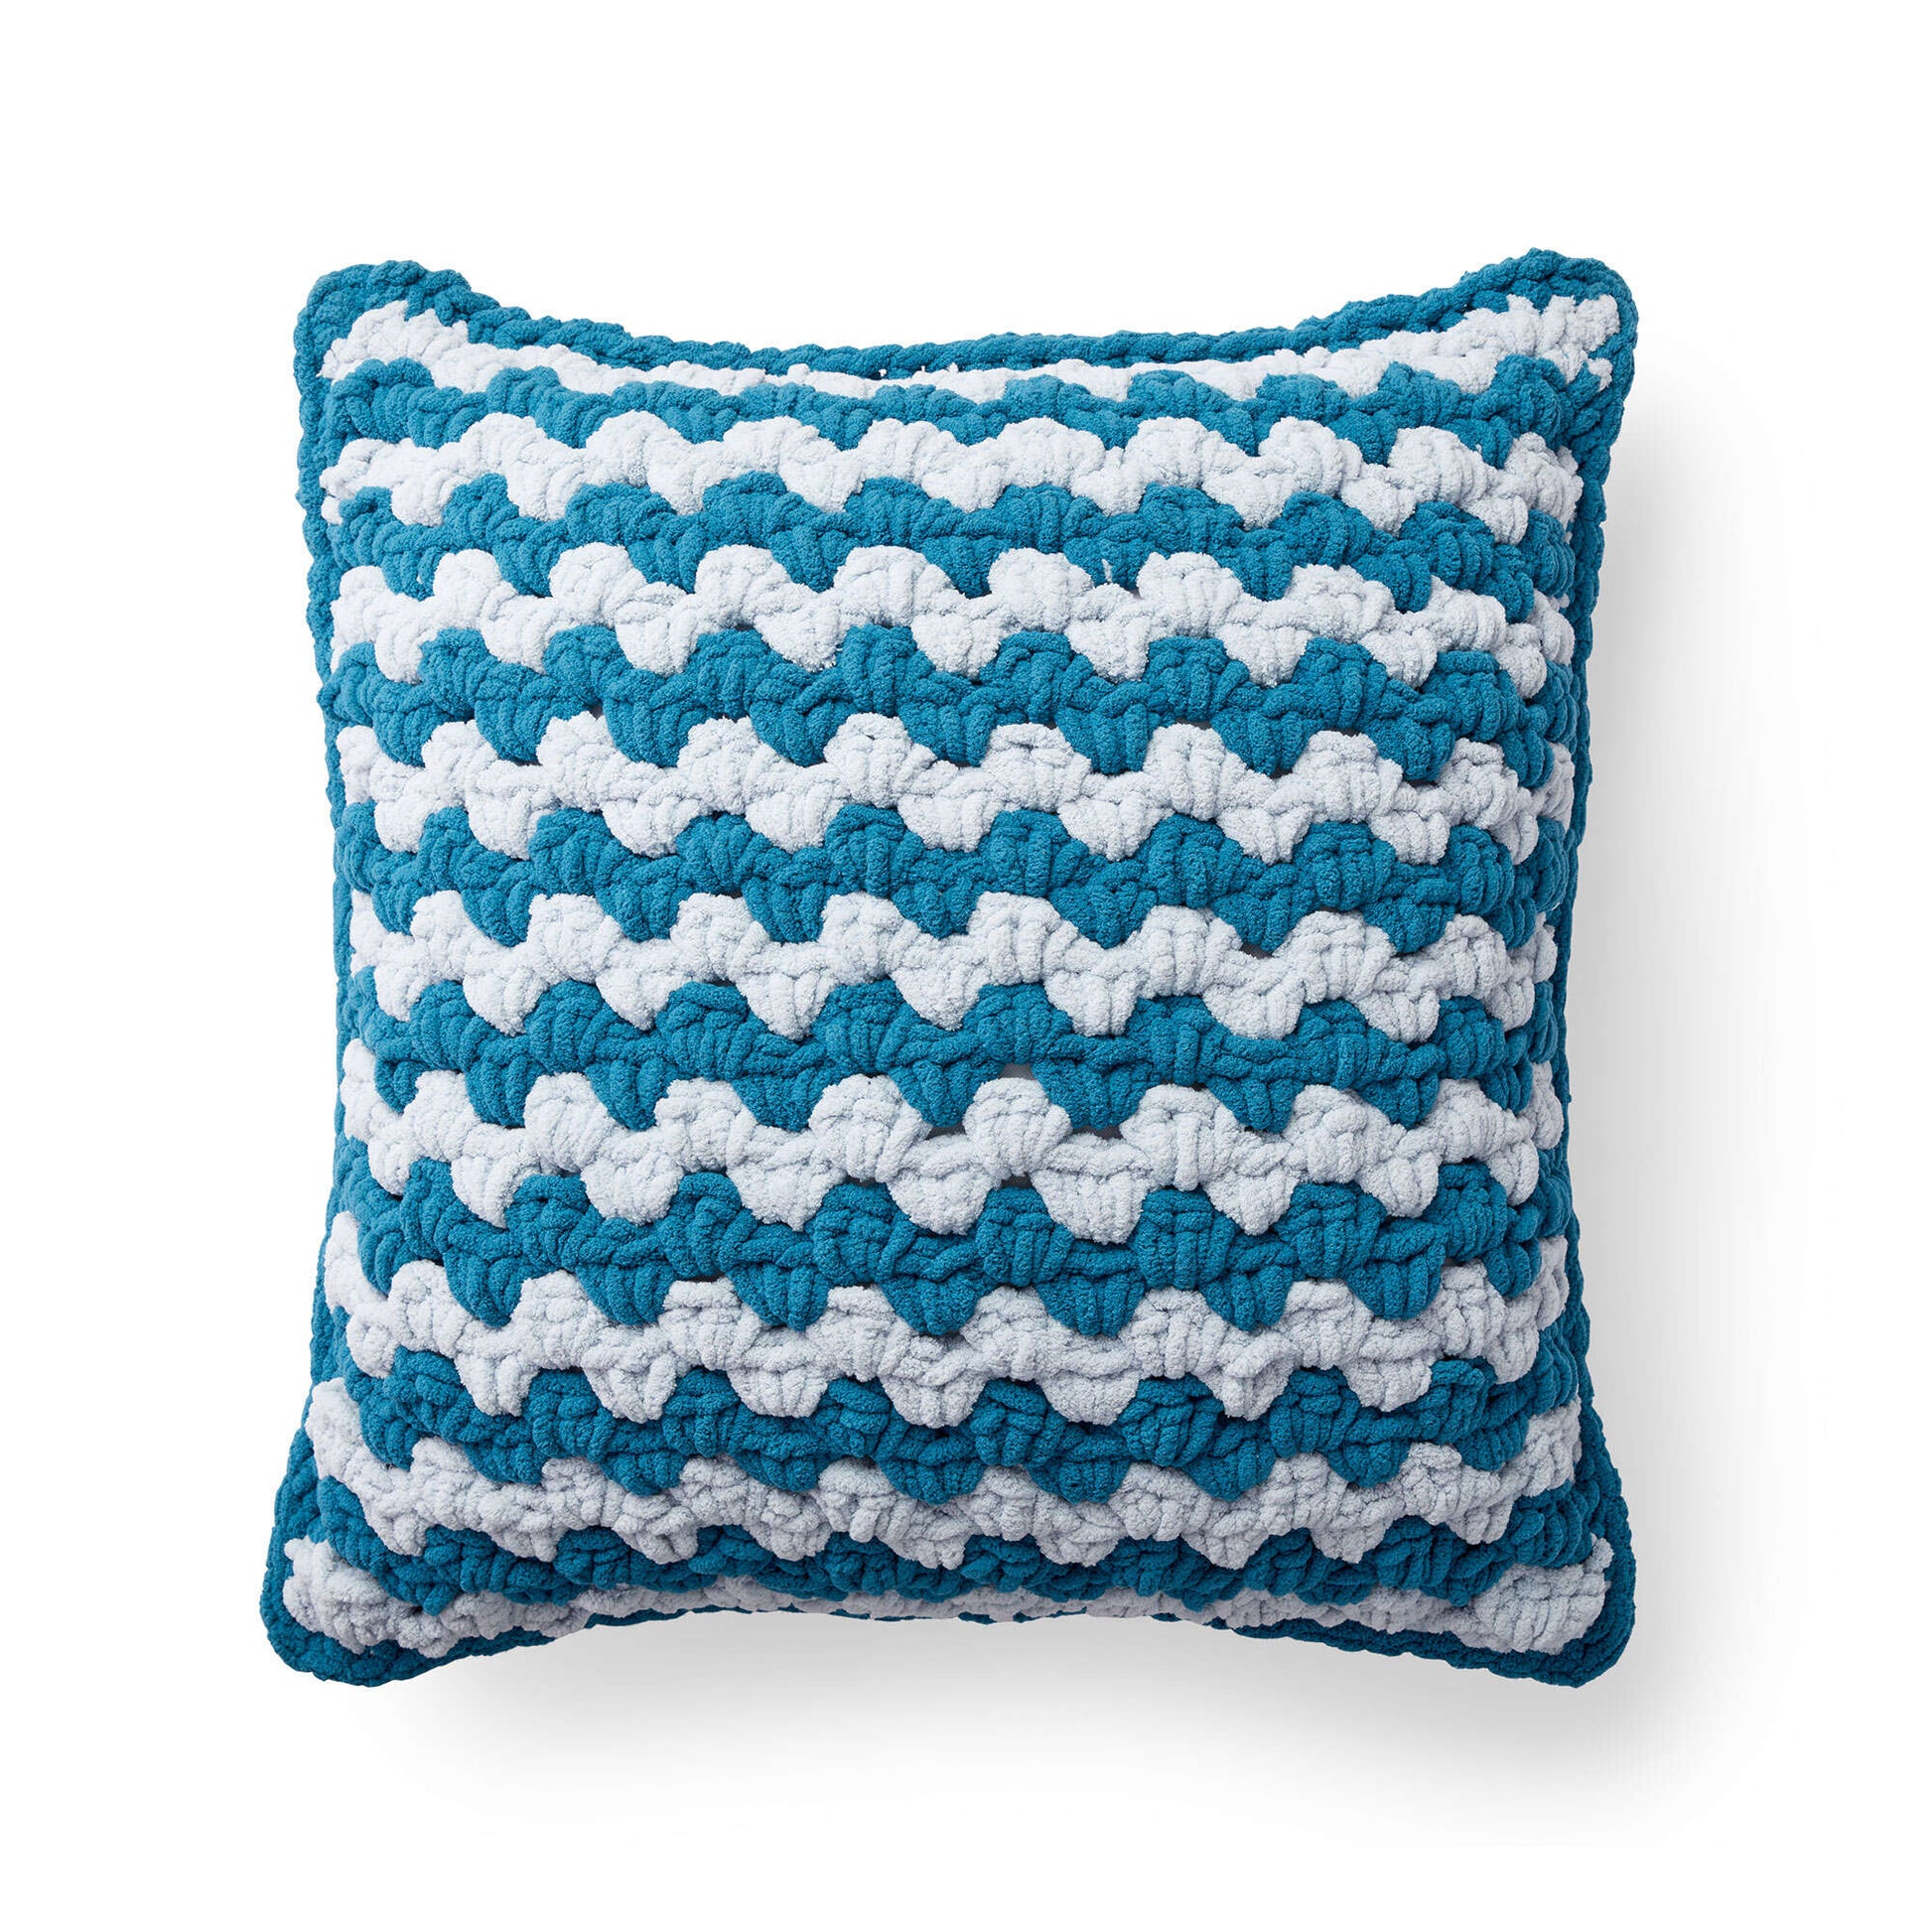 Bernat Granny Striped Crochet Floor Cushion Crochet Pillow made in Bernat Blanket Extra yarn